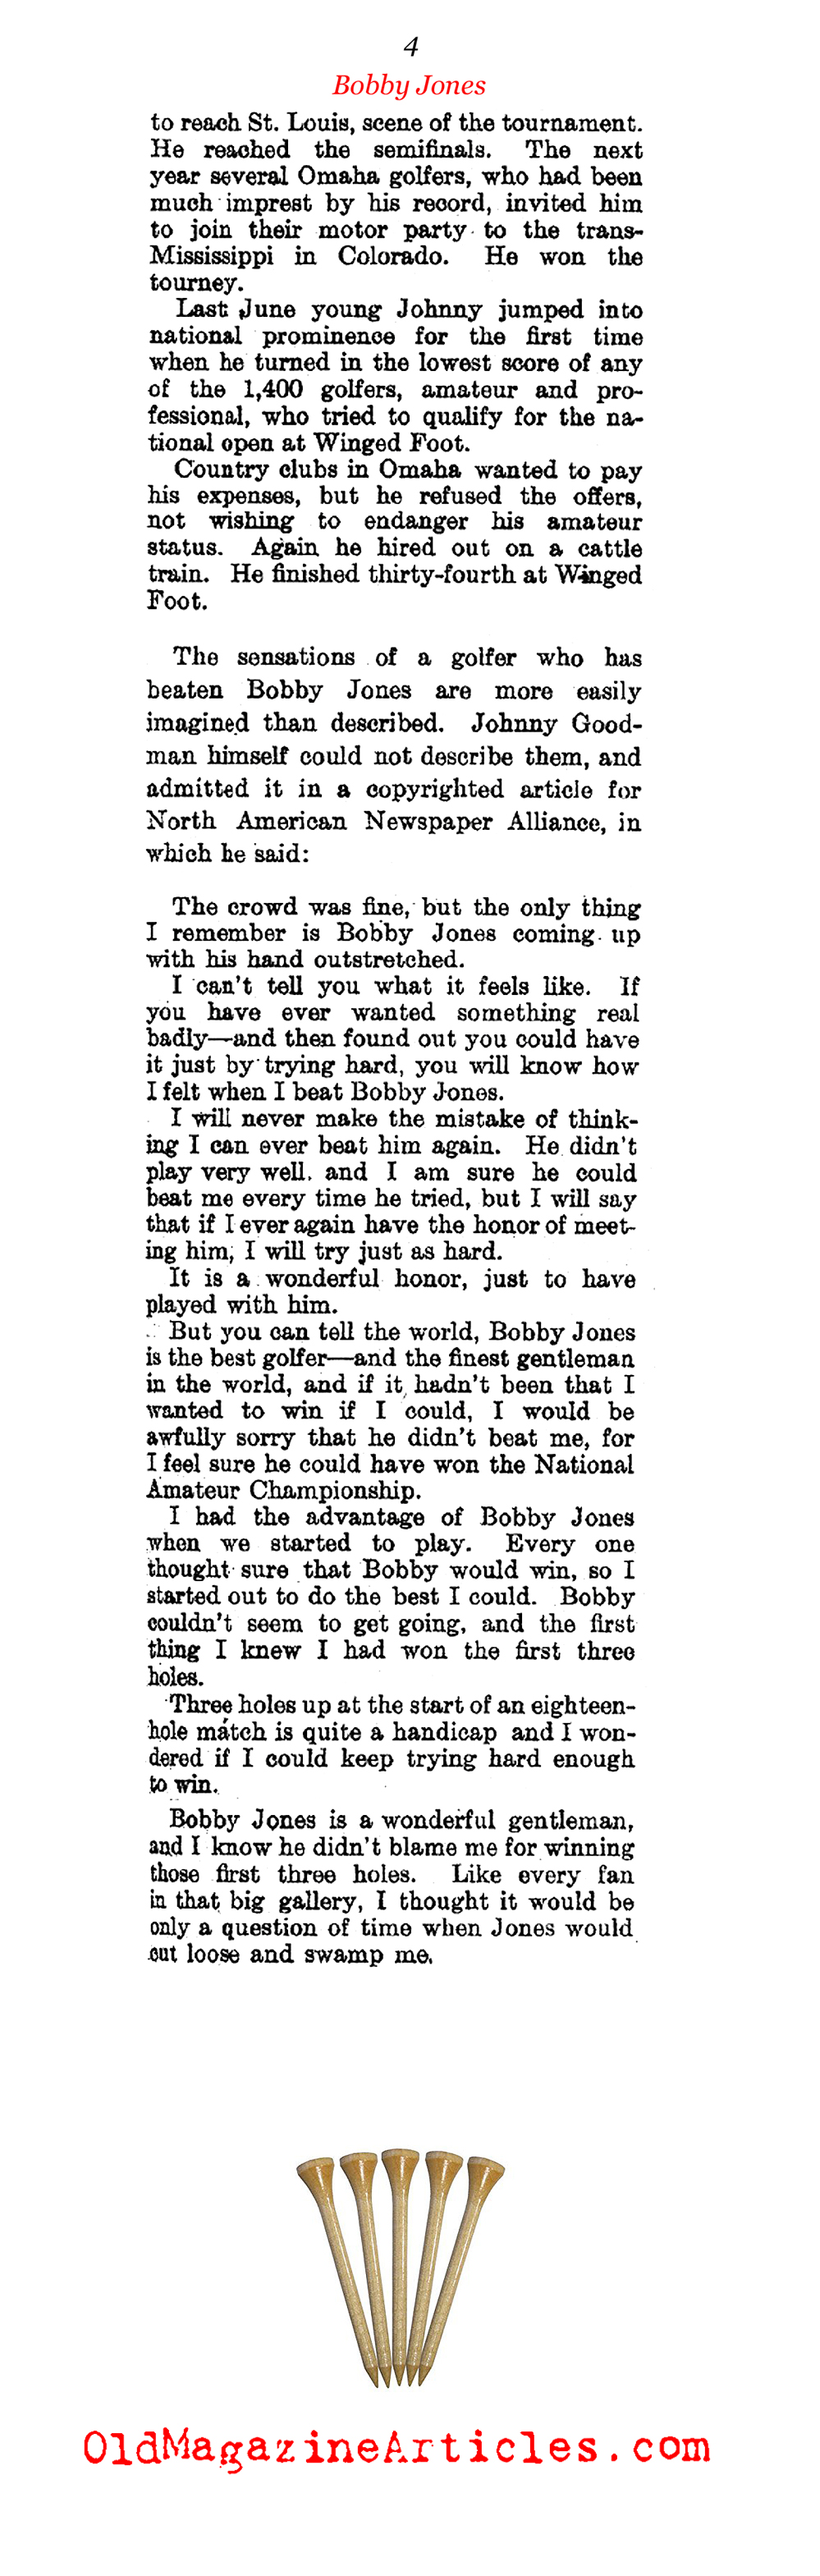 Is Bobby Jones Losing Interest in Golf? (Literary Digest, 1929)